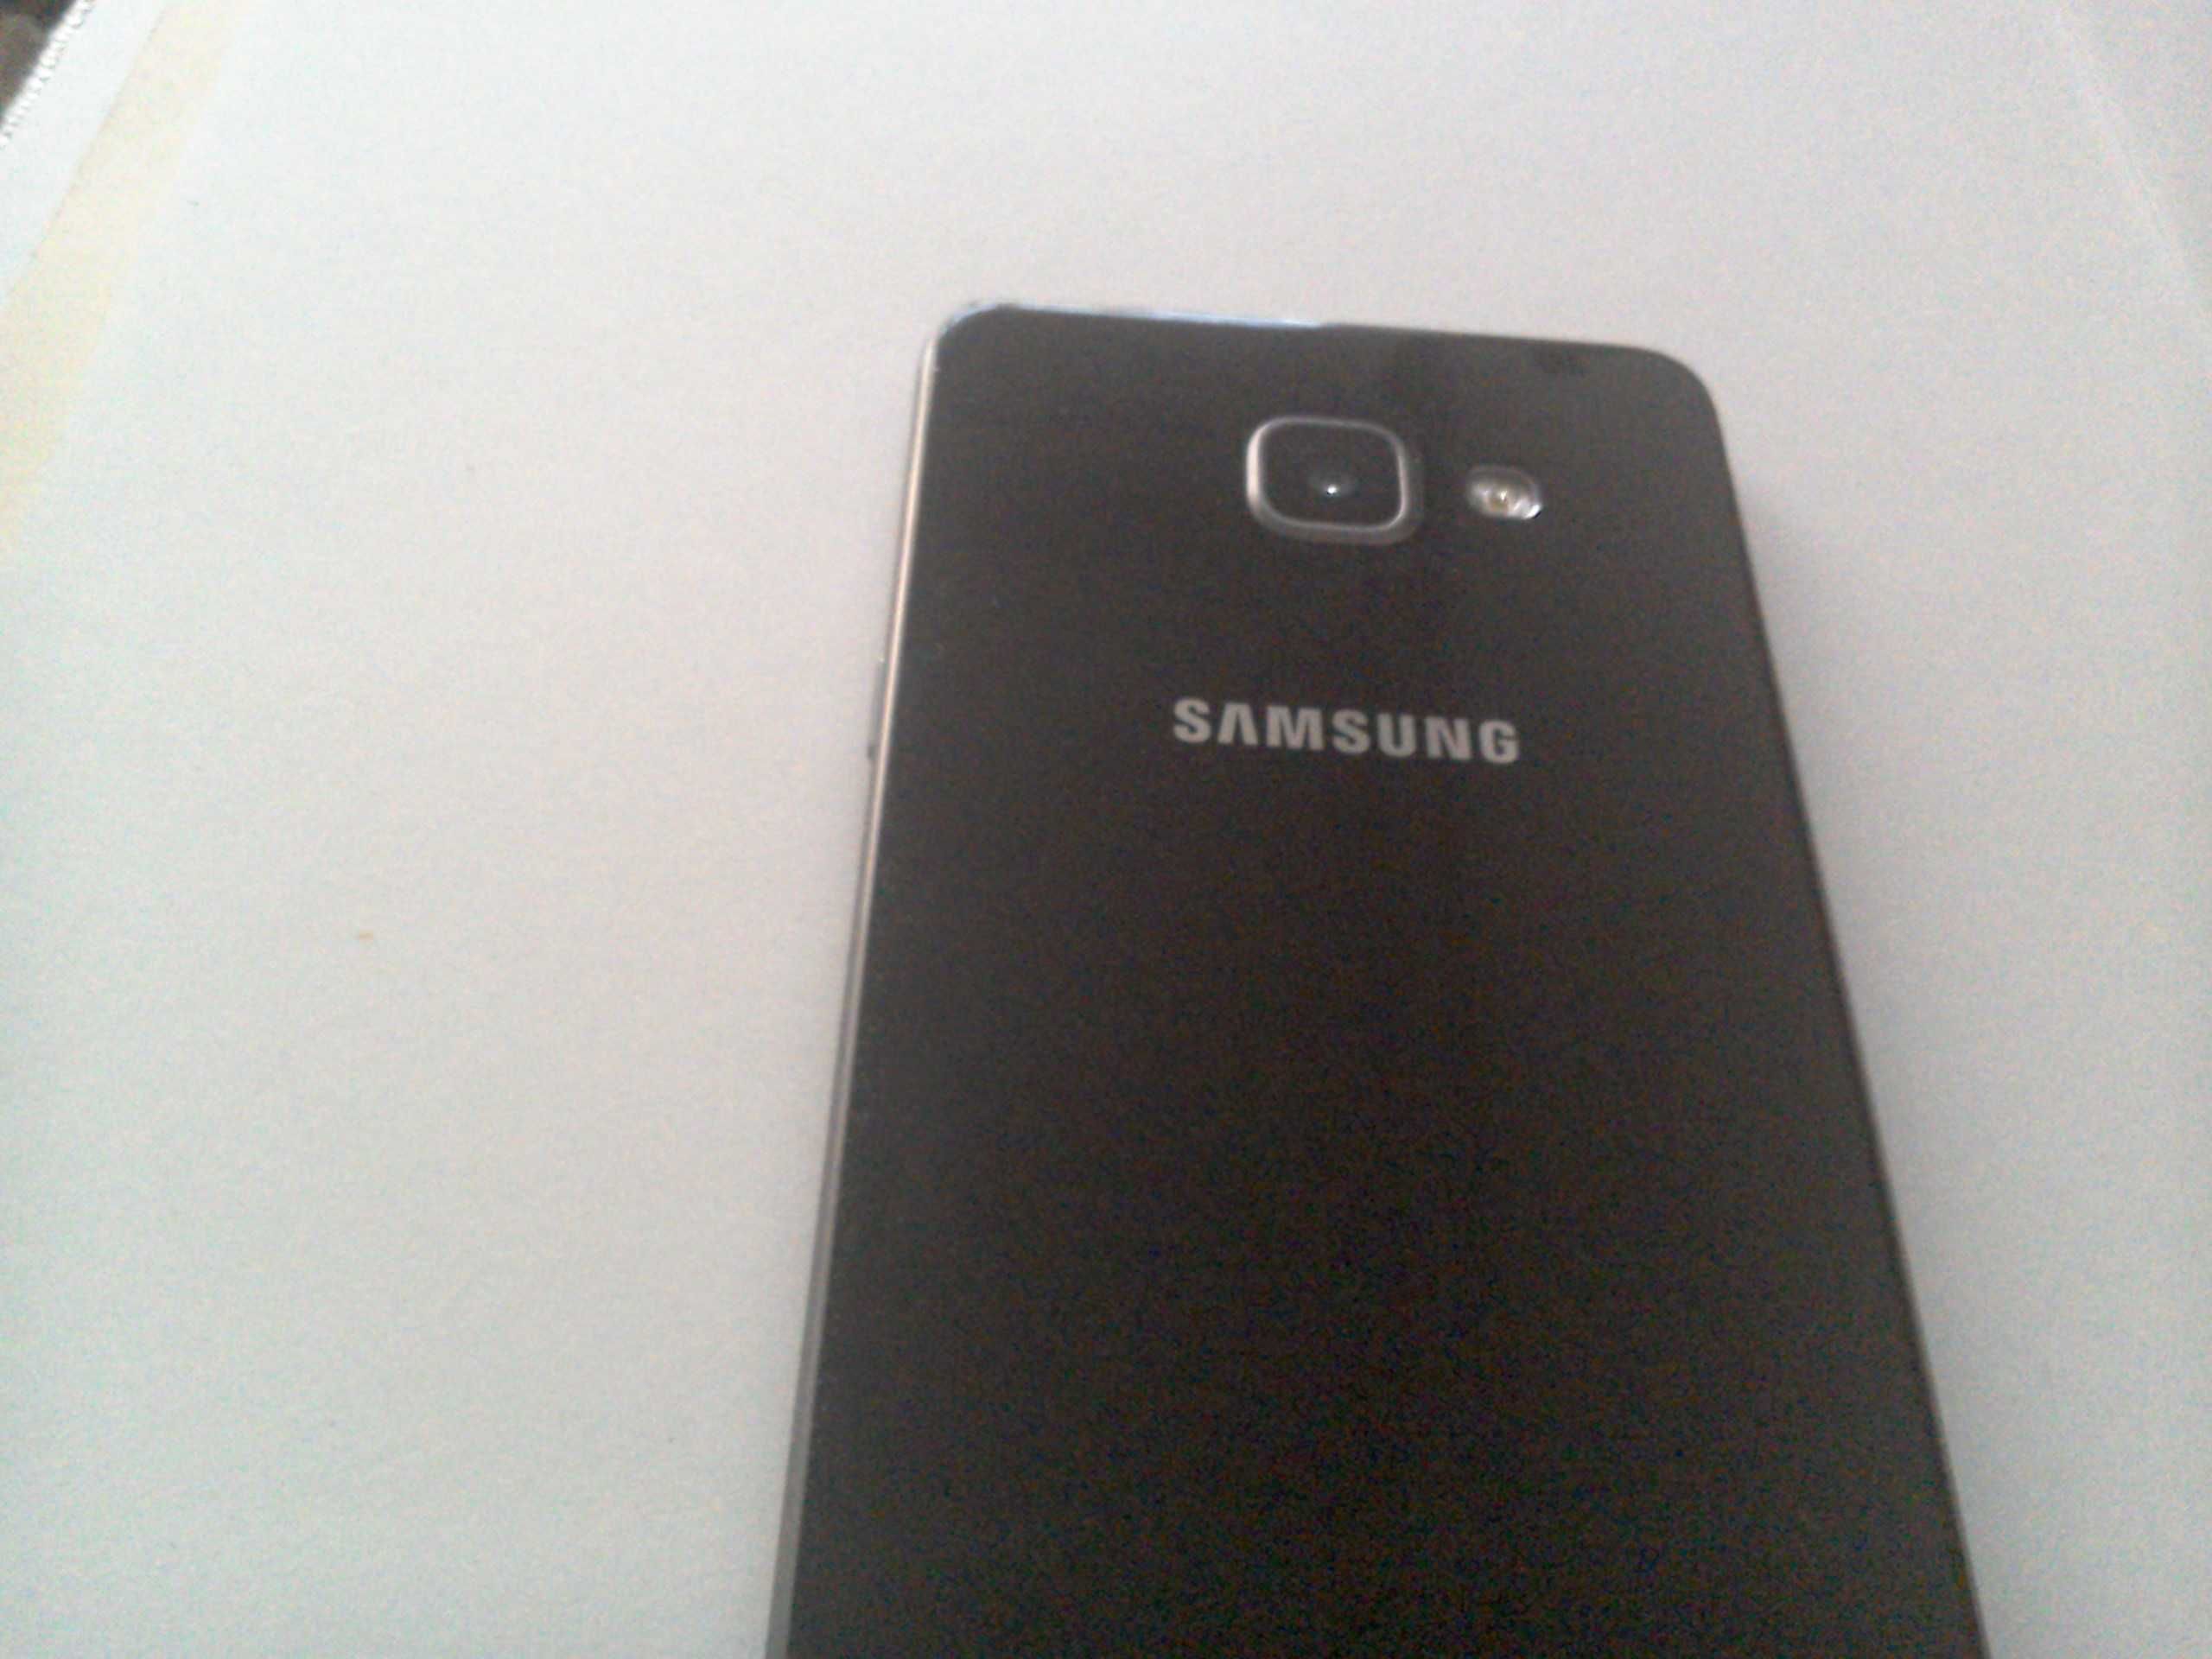 Telefon Samsung Galaxy A5 defect, nu se aprinde.